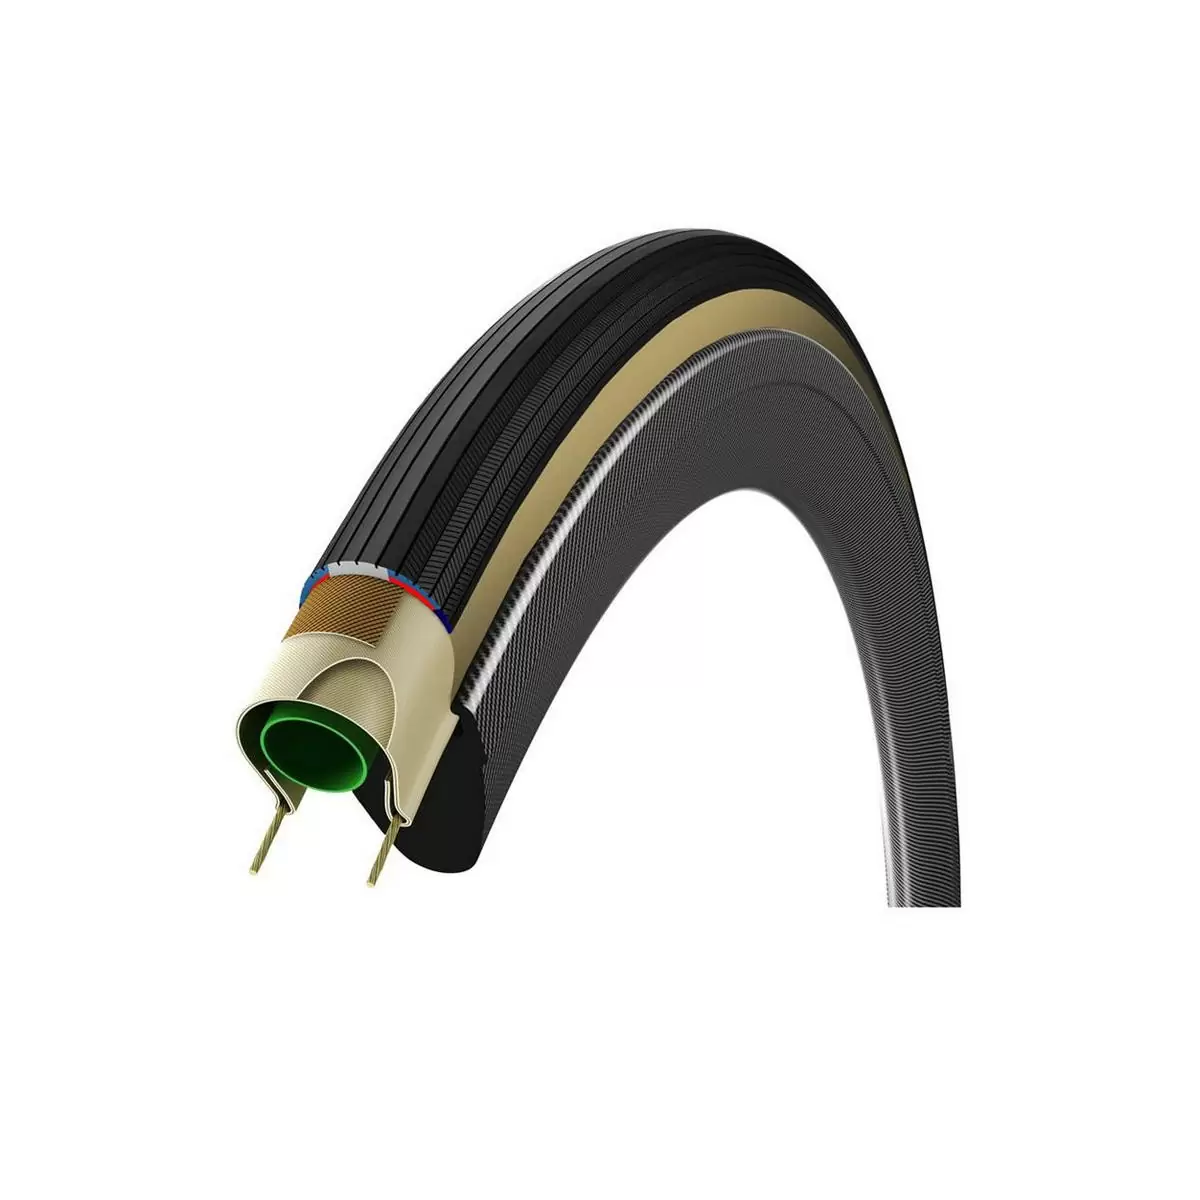 Tire Corsa Control G+ Graphene 700x28c Clincher Folding Black/Skinwall - image